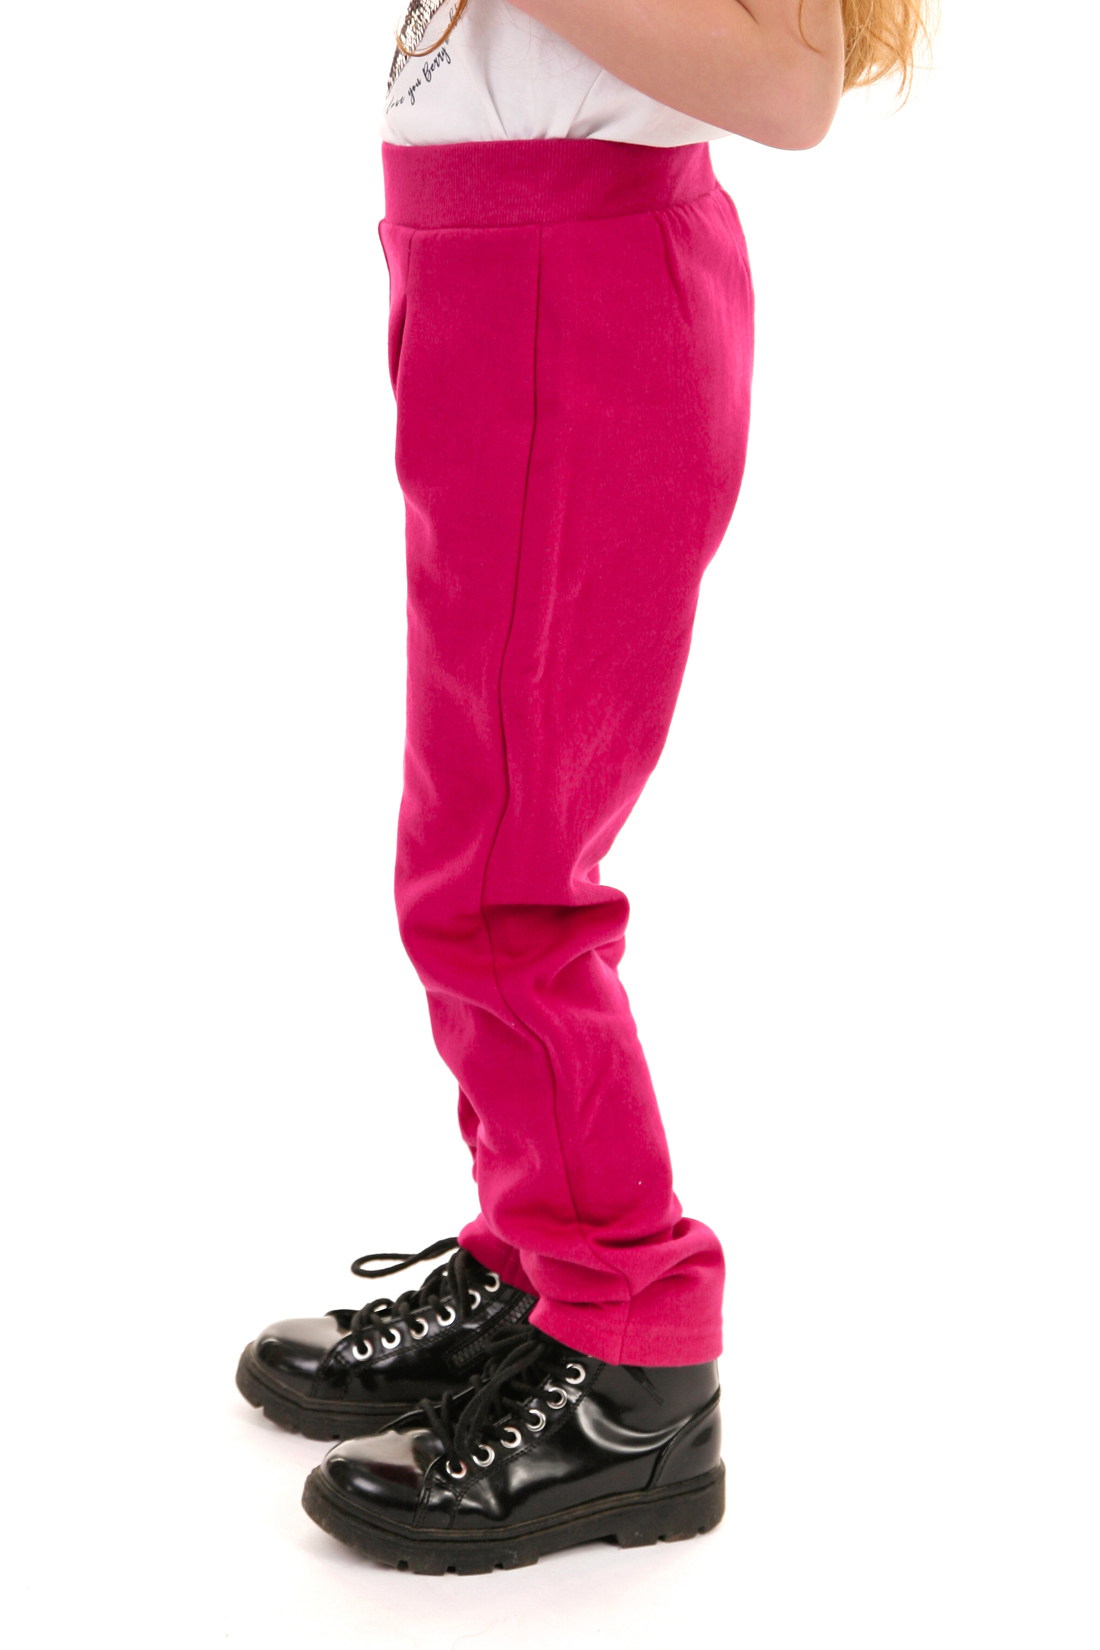 Брюки для девочки (арт. baon BK298511), размер 98-104, цвет розовый Брюки для девочки (арт. baon BK298511) - фото 2